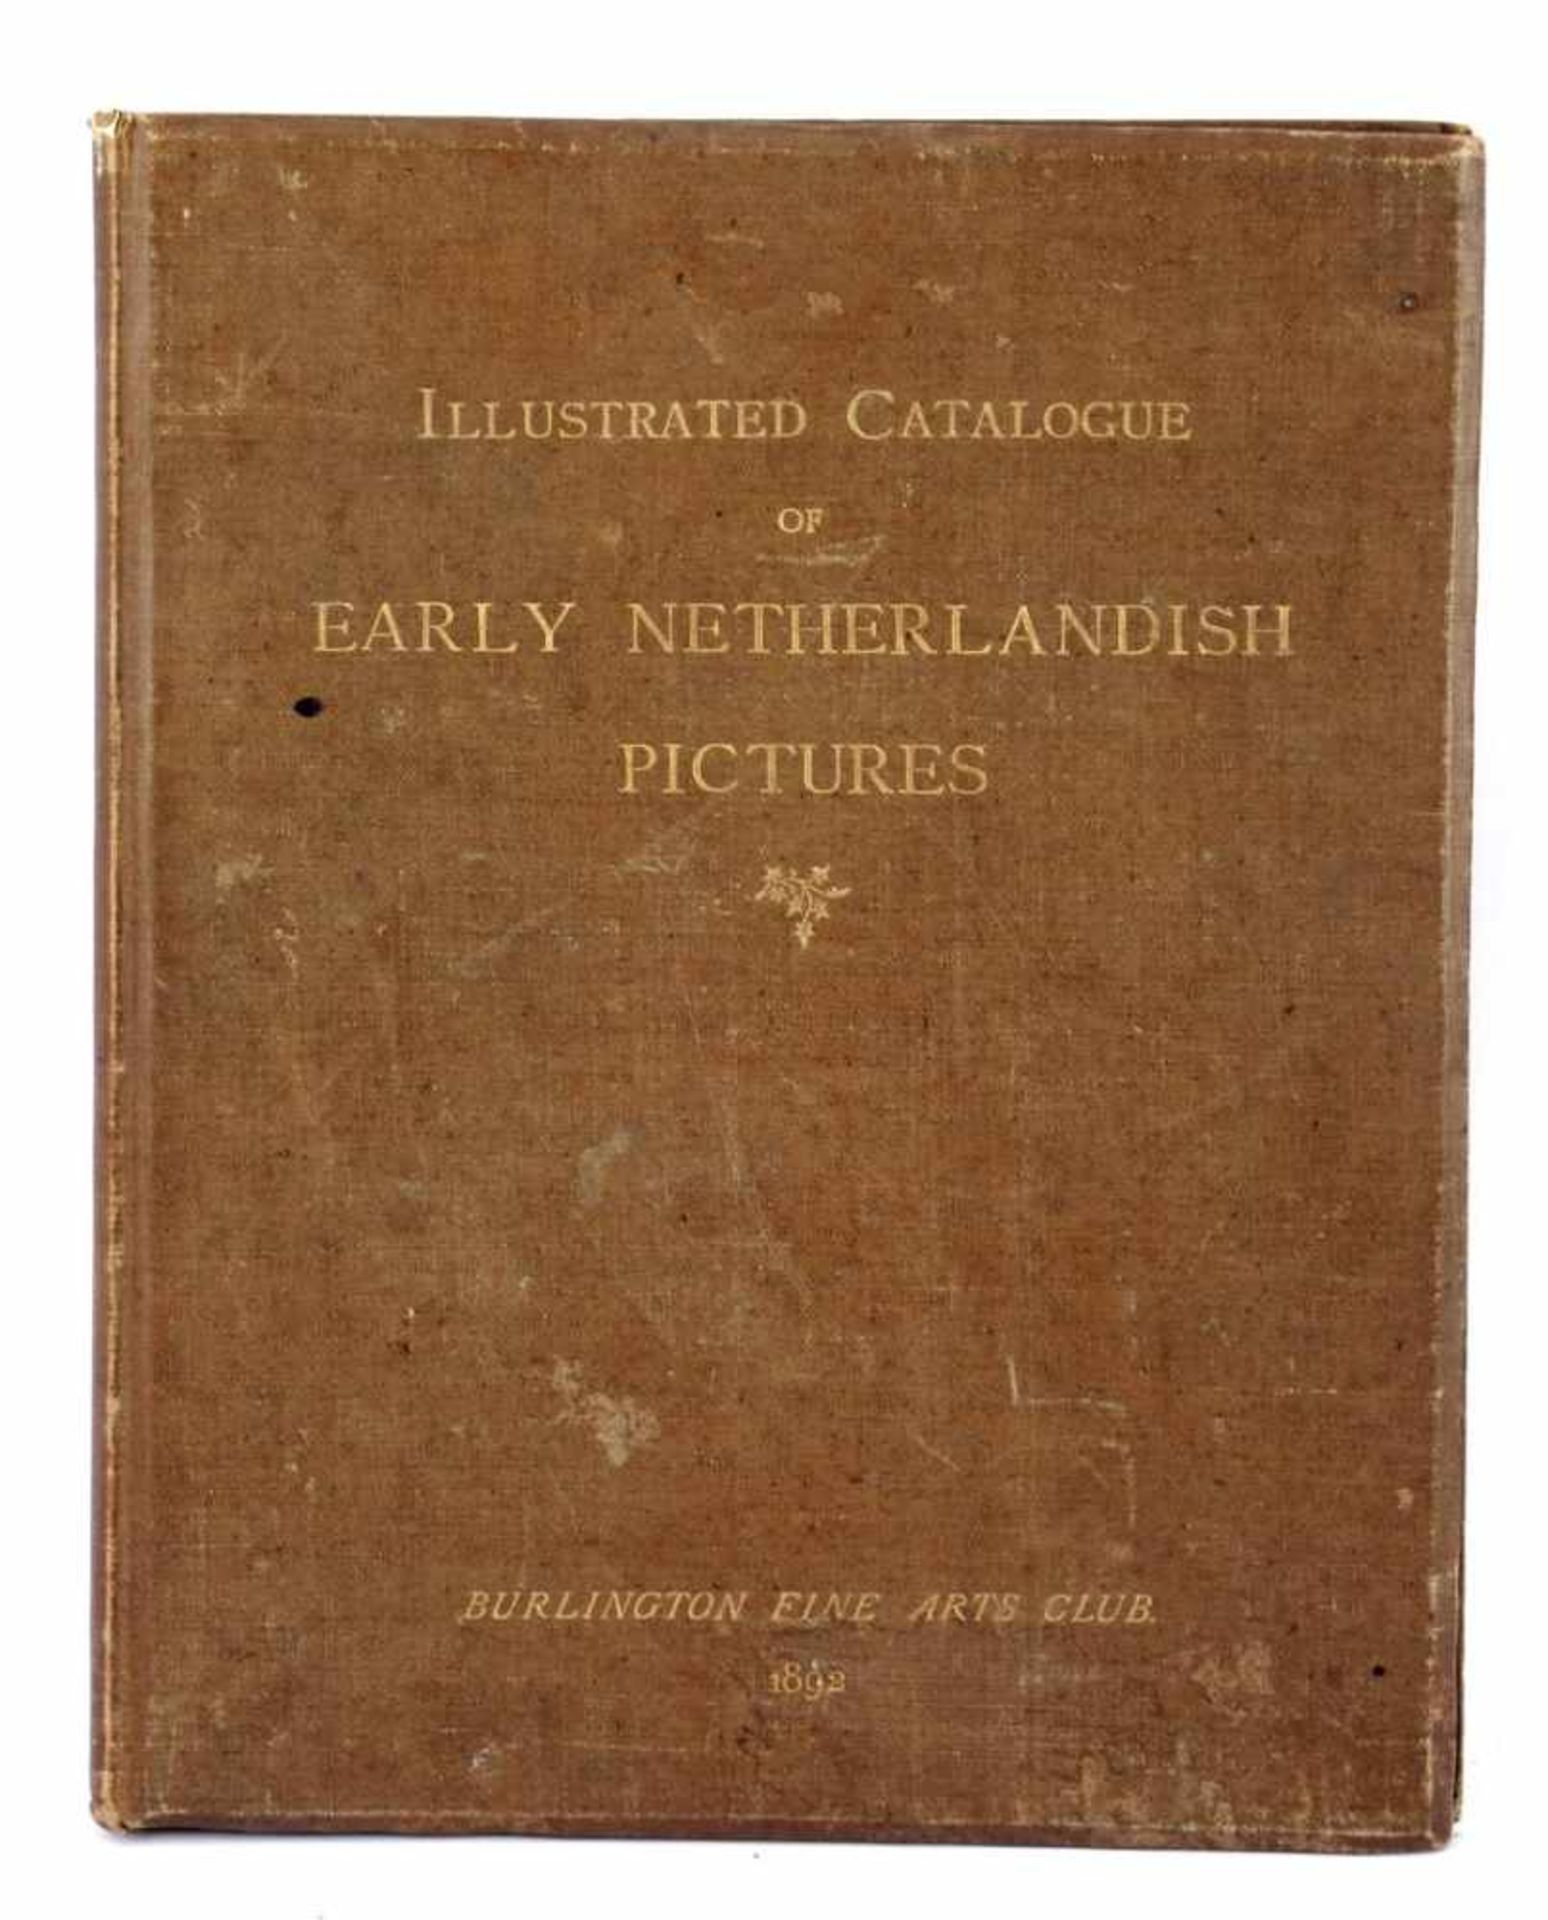 Illustrated catalog of early Netherlandish pictures, edition Burlington Fine Arts Club, year 1892